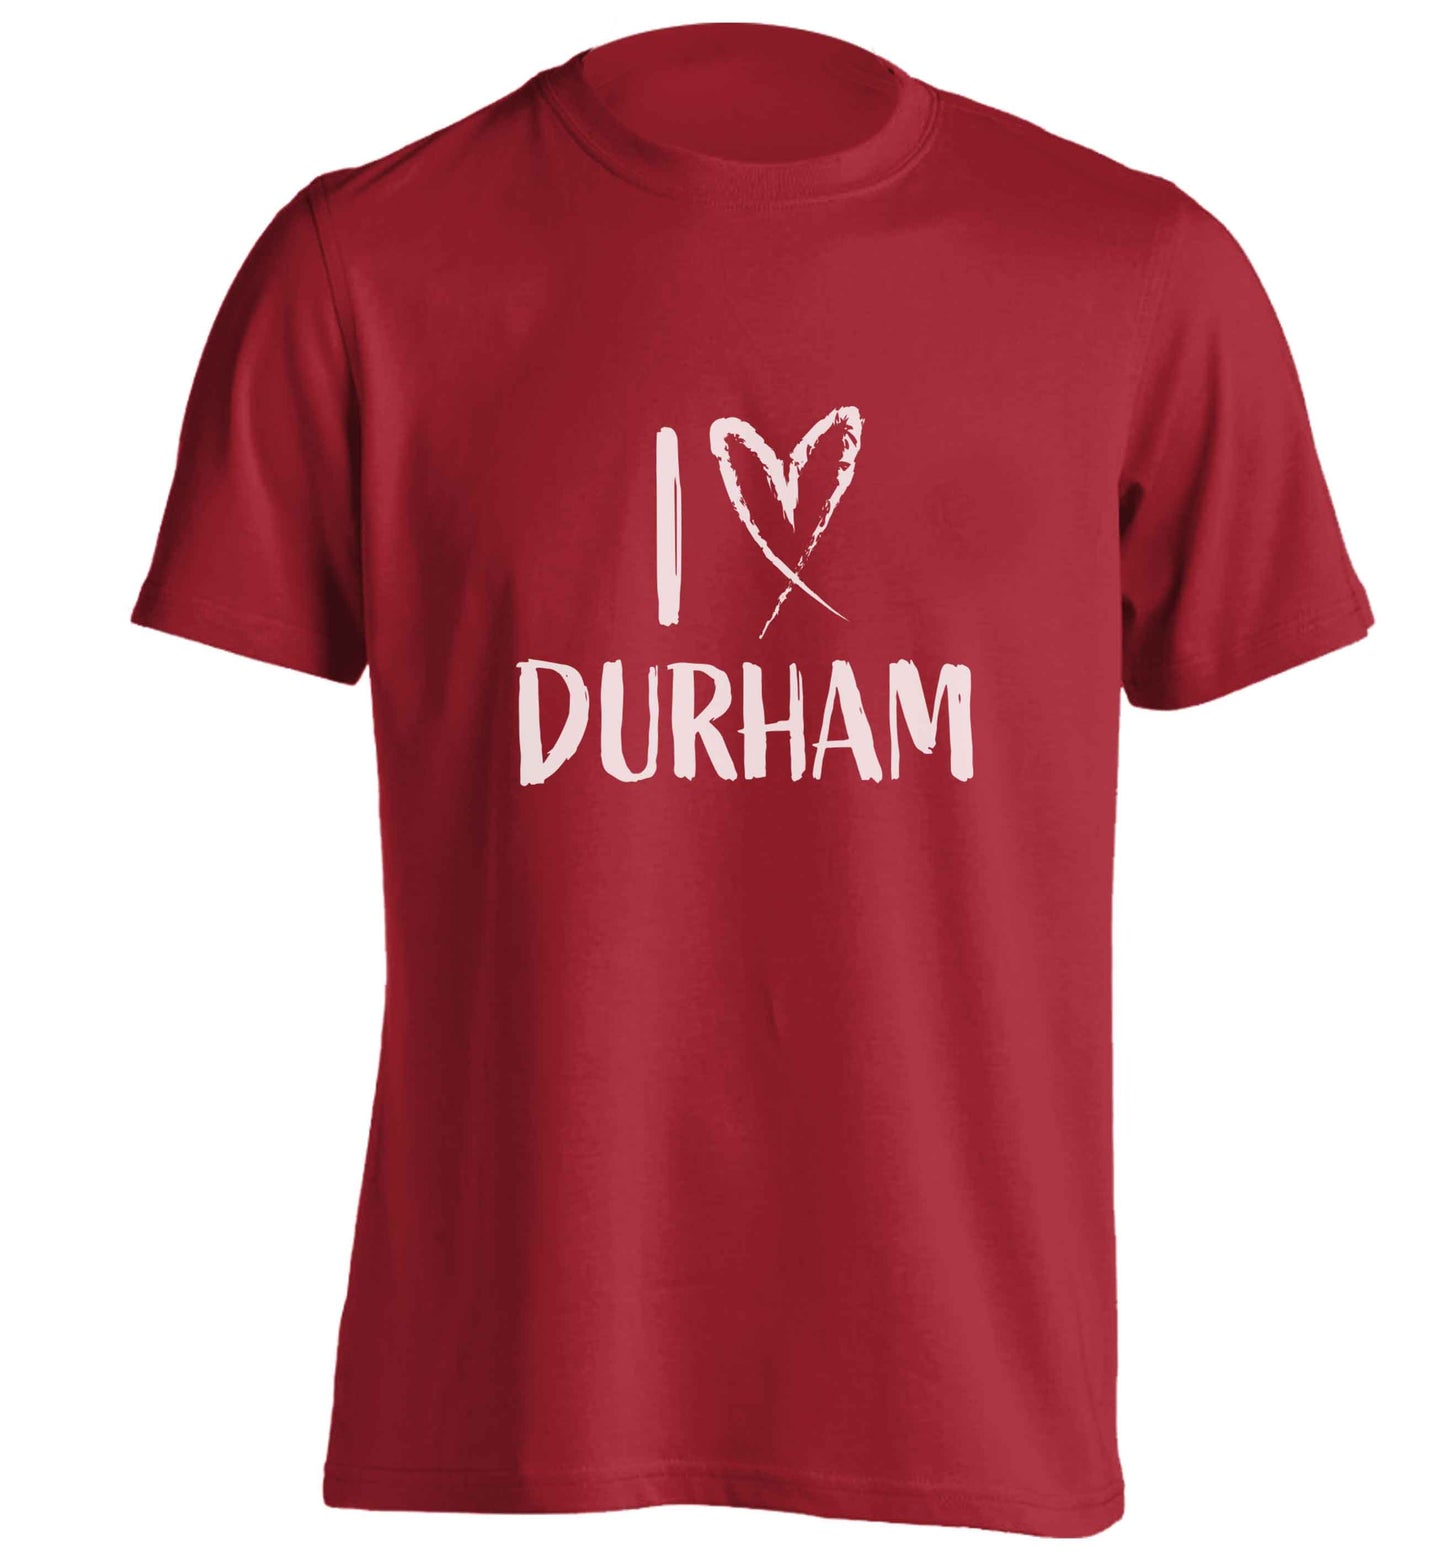 I love Durham adults unisex red Tshirt 2XL